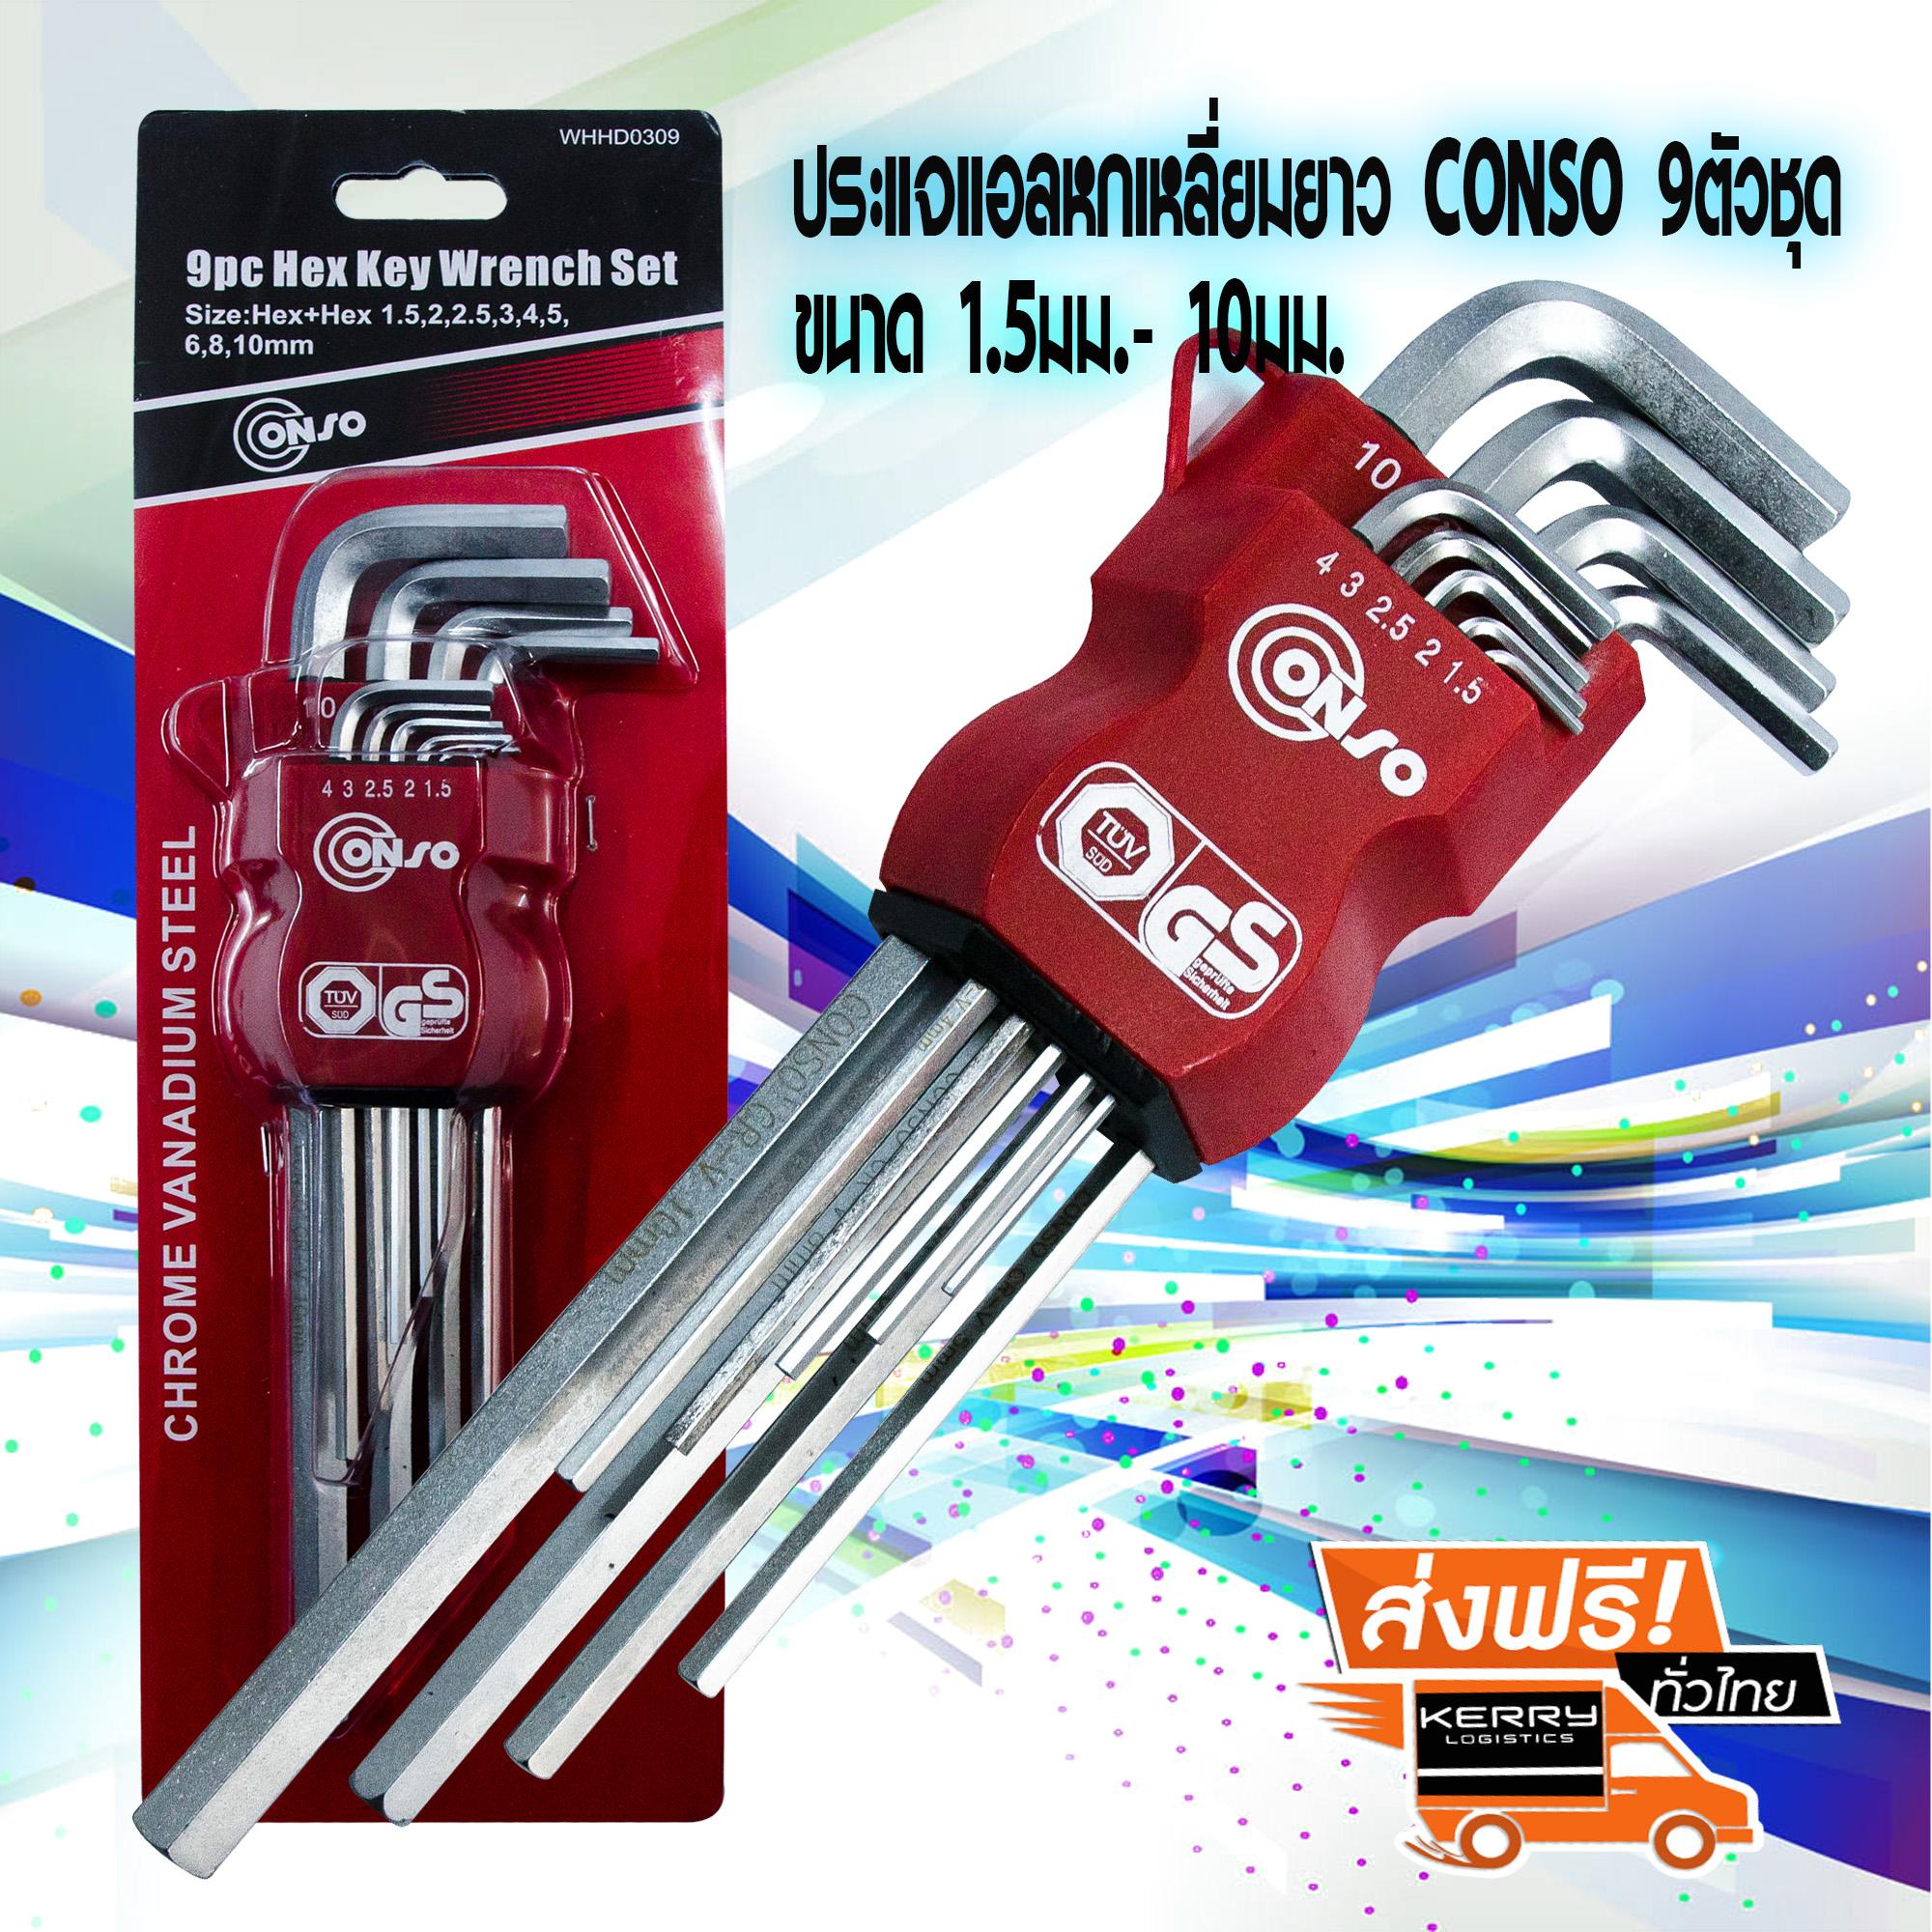 Conso ชุดประแจแอล ประแจแอล ประแจหกเหลี่ยมยาว ชนิดมิล 9ตัวชุด  1.5-10มม  9pcs Metric Hex Key Wrench Set Conso